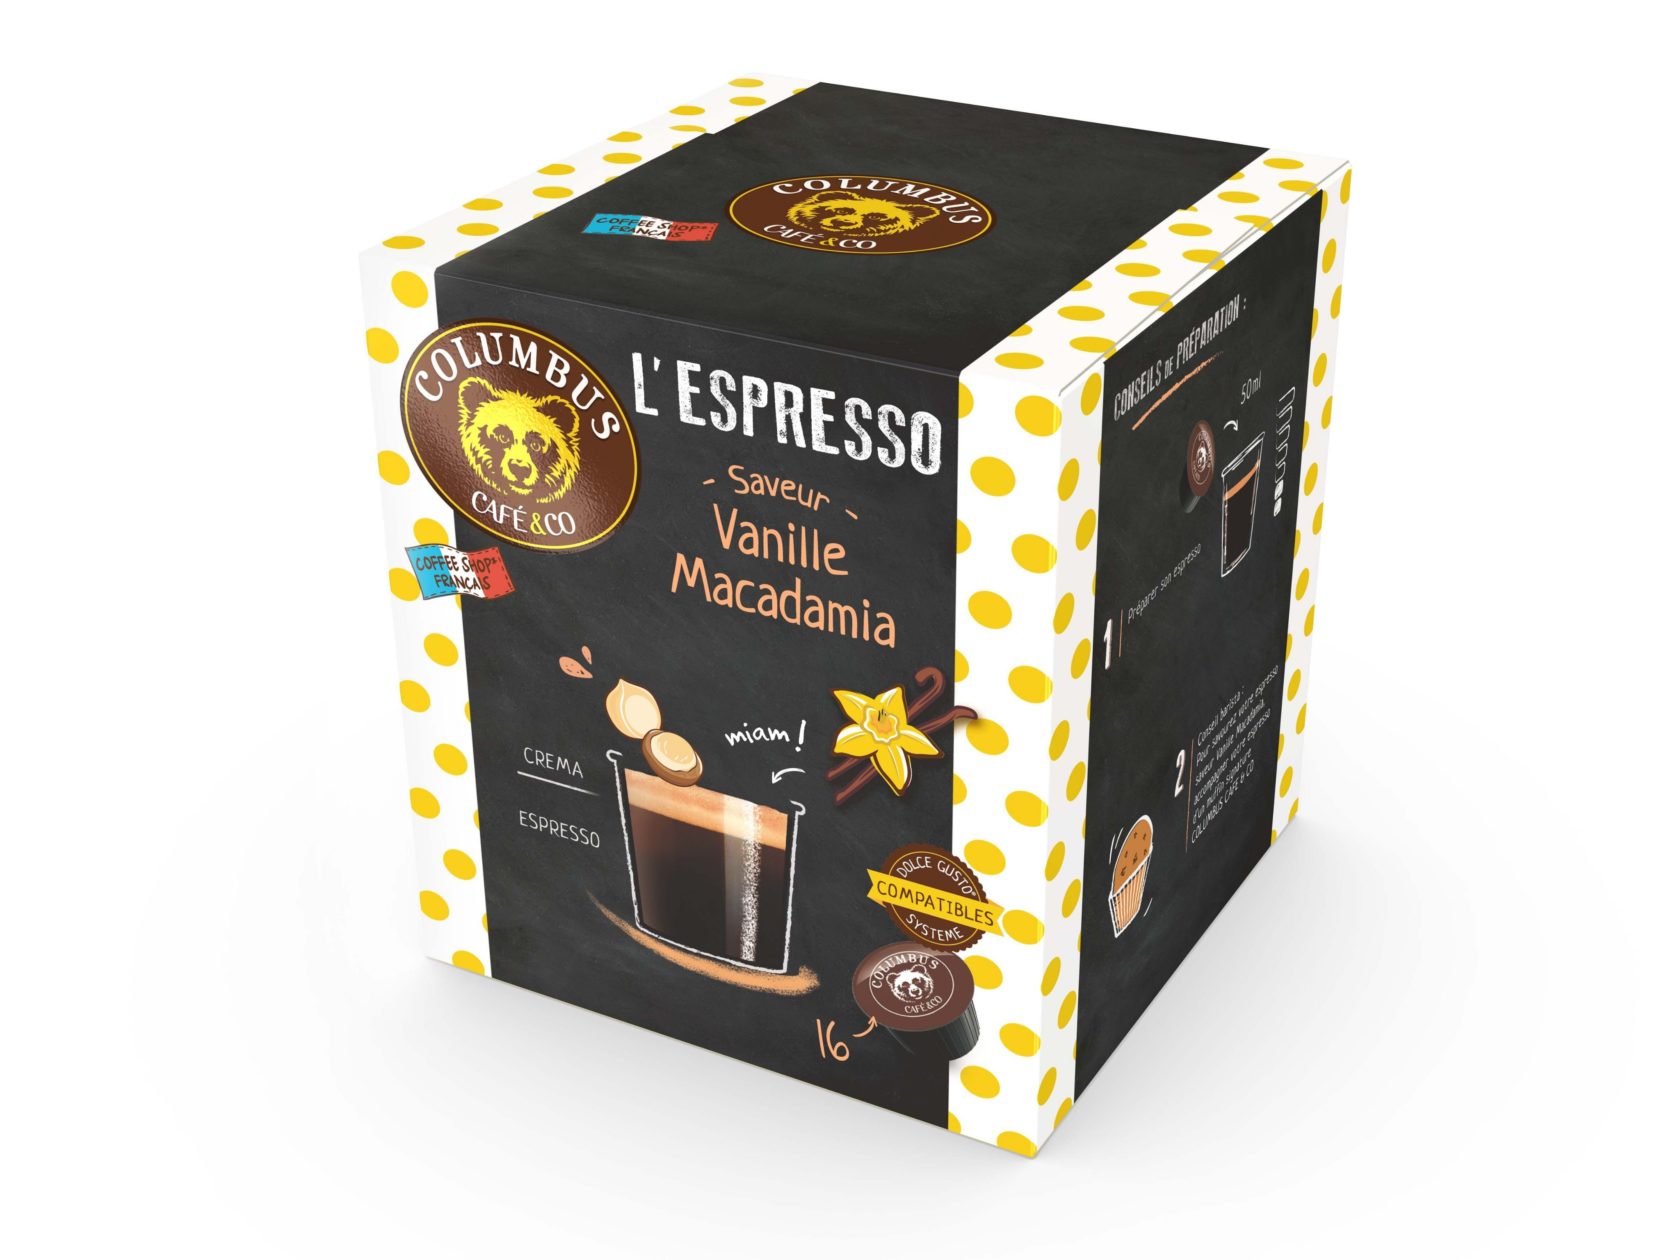 L'Espresso saveur Vanille Macadmia Dolce Gusto® x 16